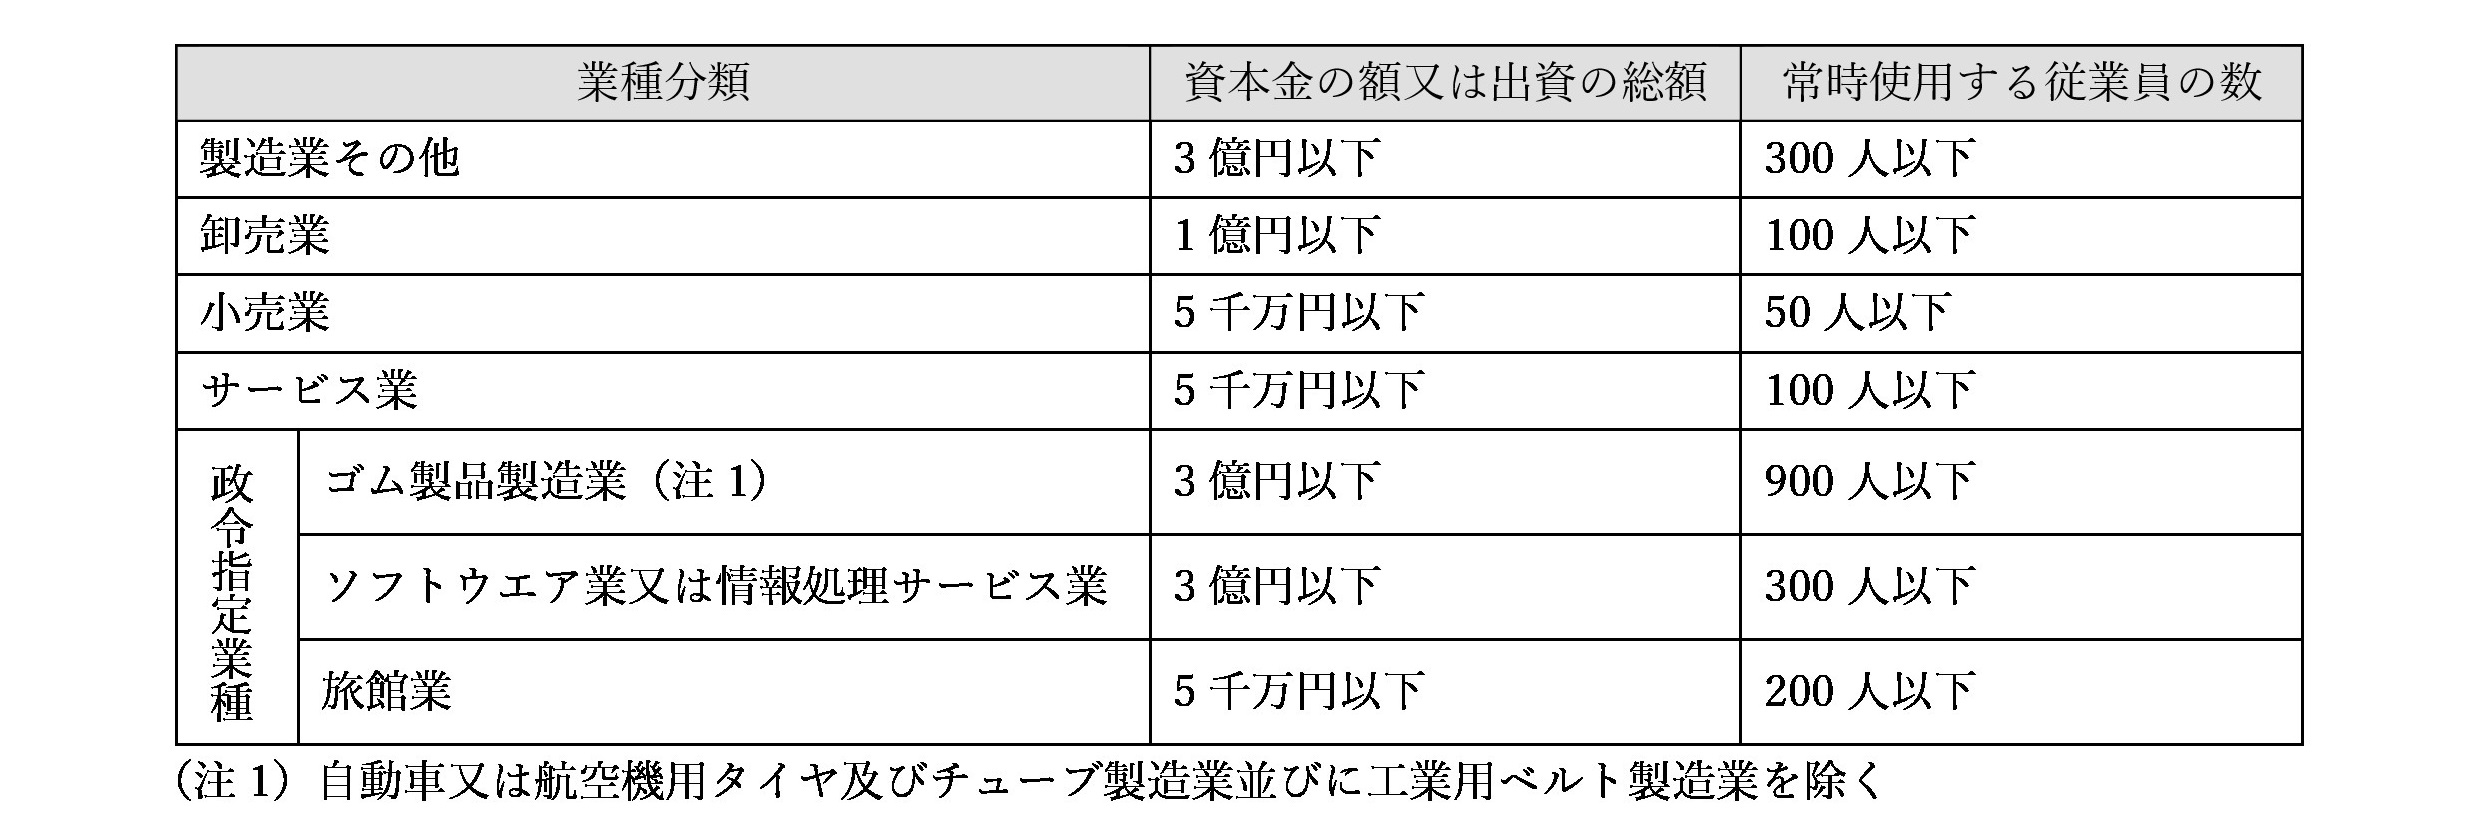 https://www.town.kadogawa.lg.jp/industry/data/%E4%B8%AD%E5%B0%8F%E4%BC%81%E6%A5%AD%E8%80%85_%E8%AA%8D%E5%AE%9A.jpg